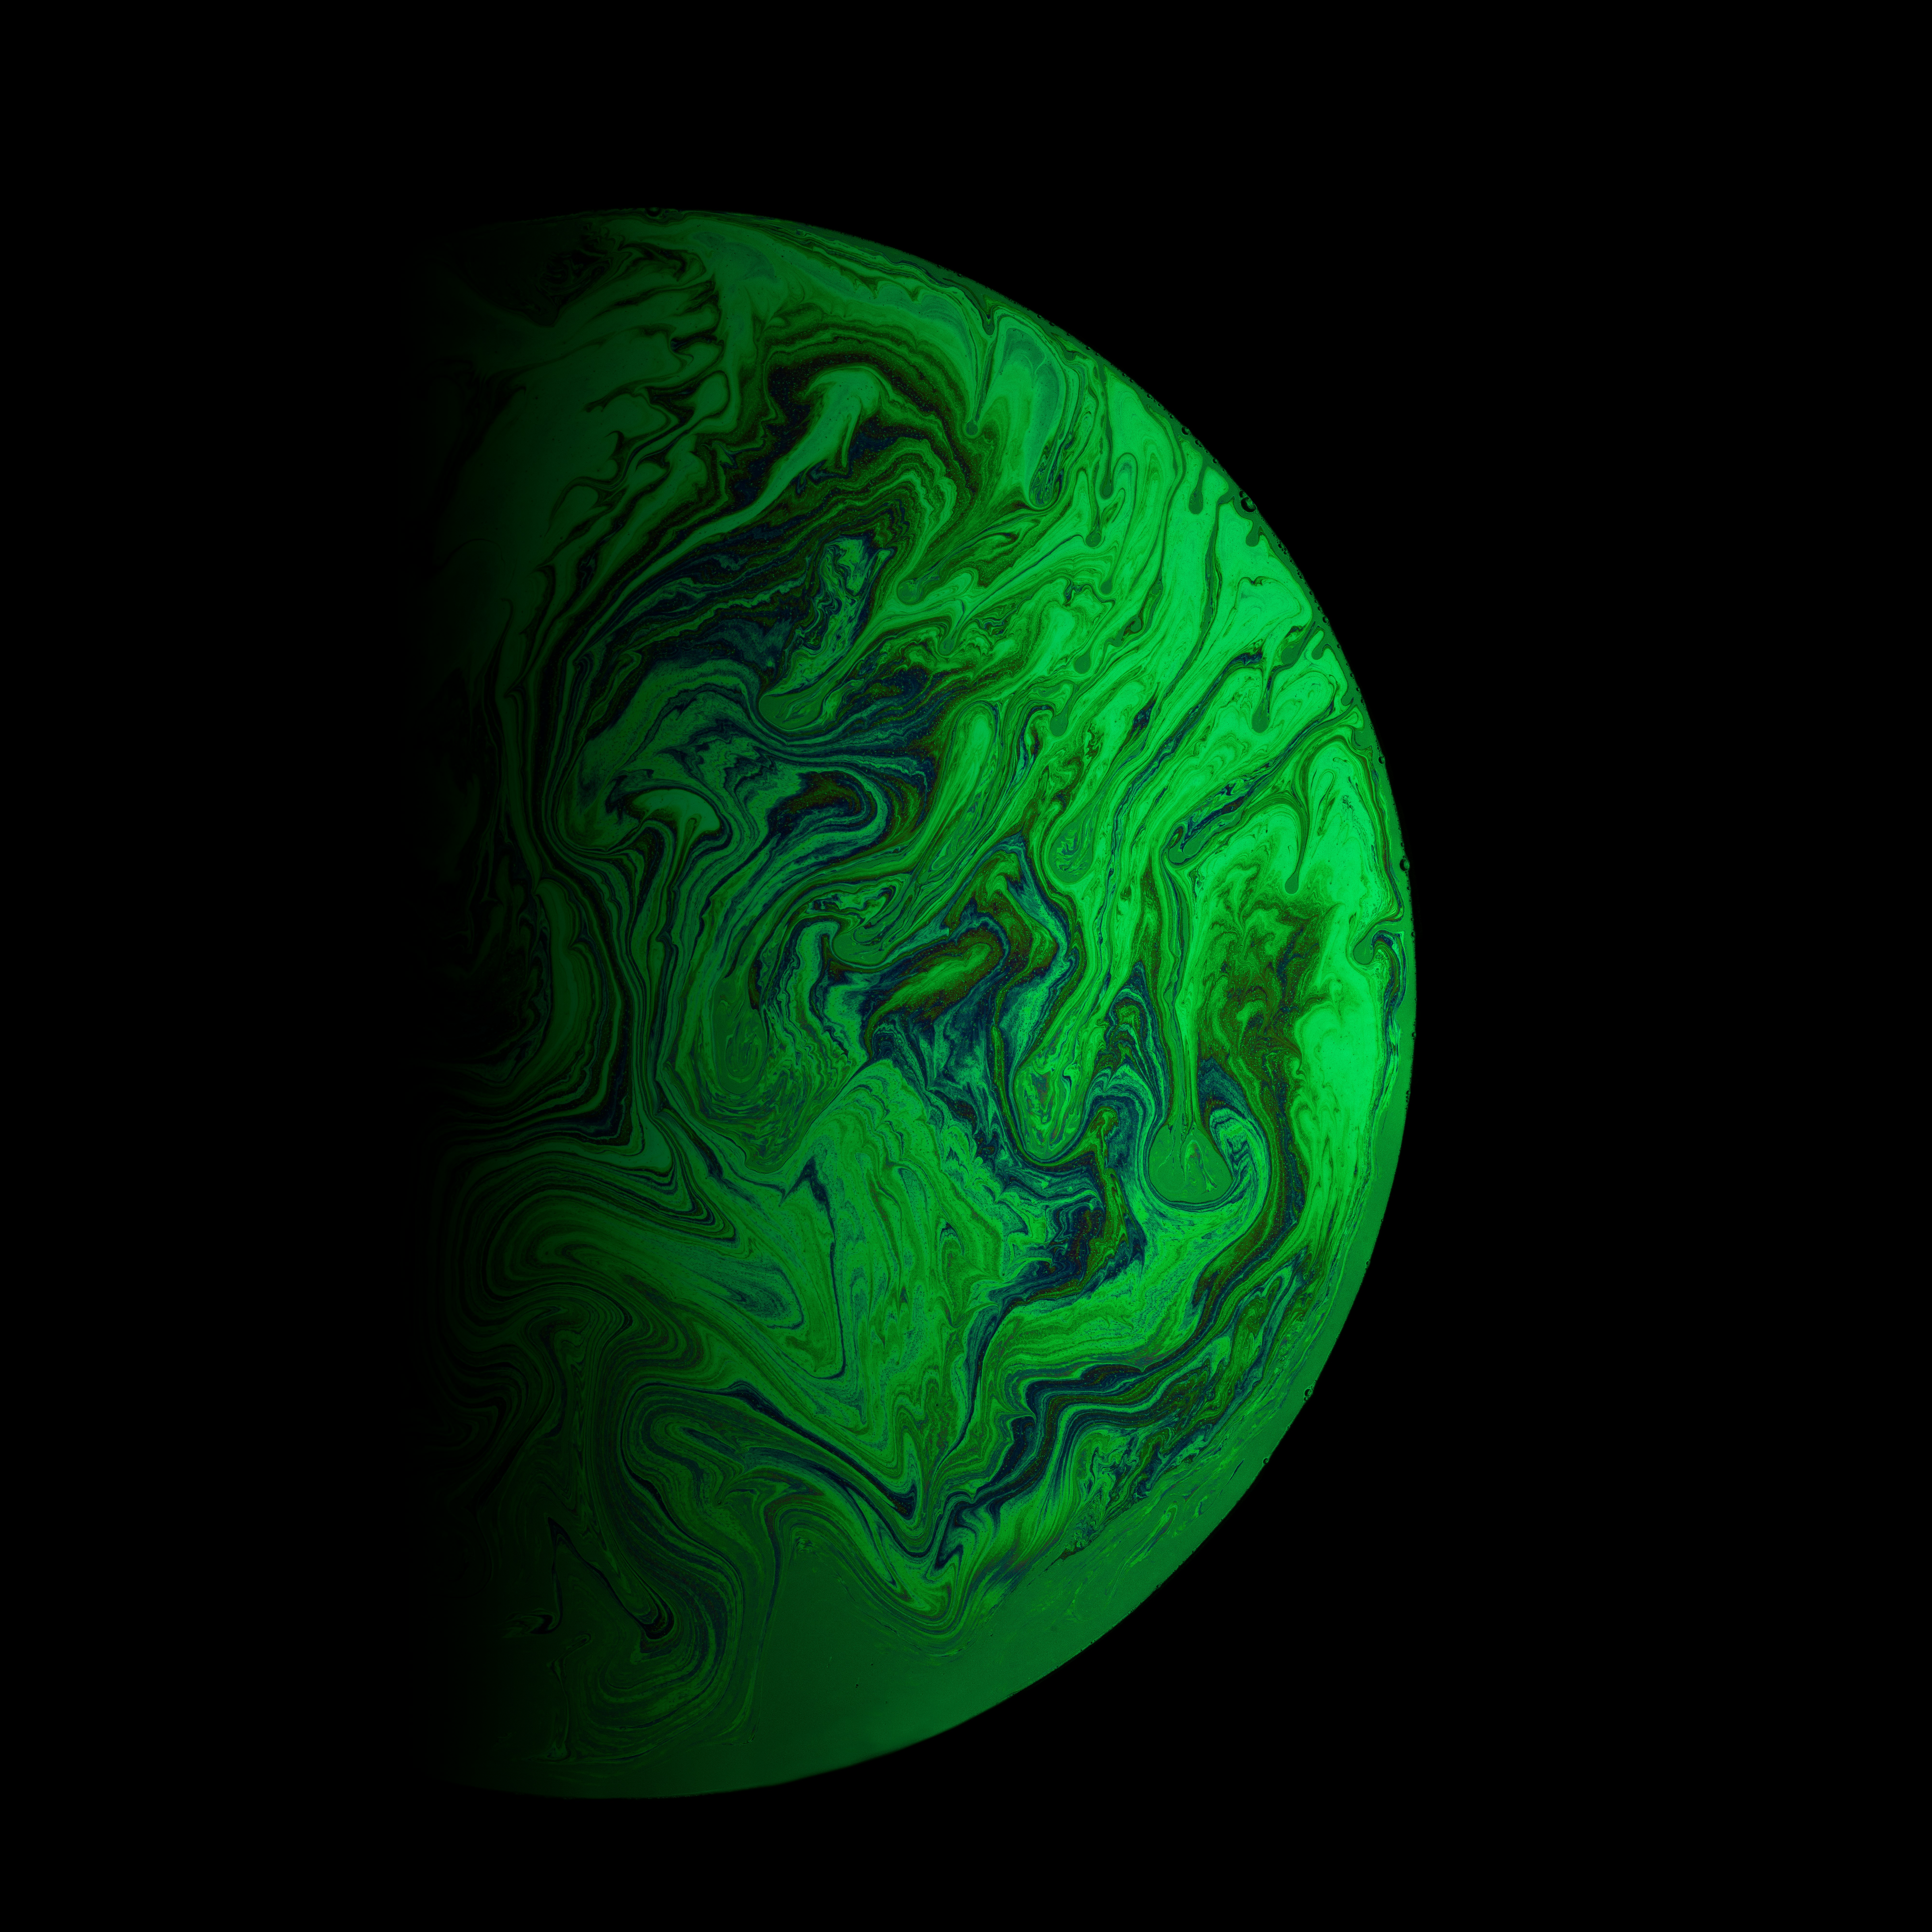 green and black planet illustration